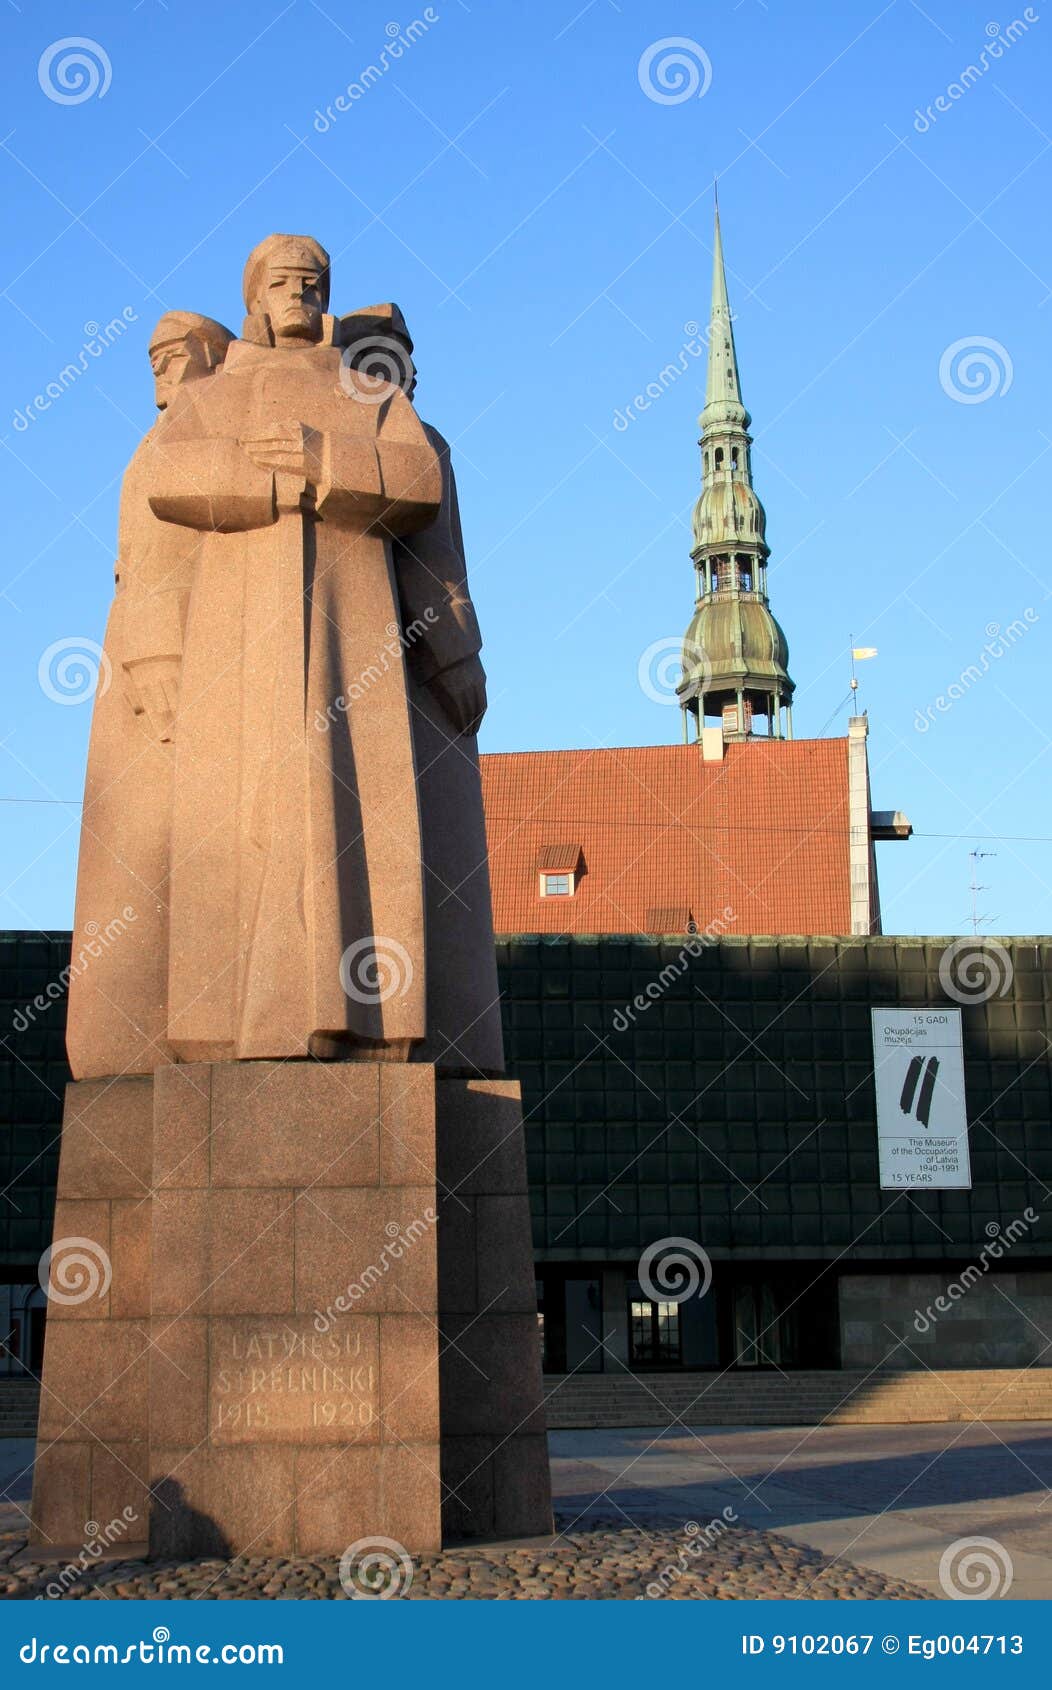 riga - statue of occupation